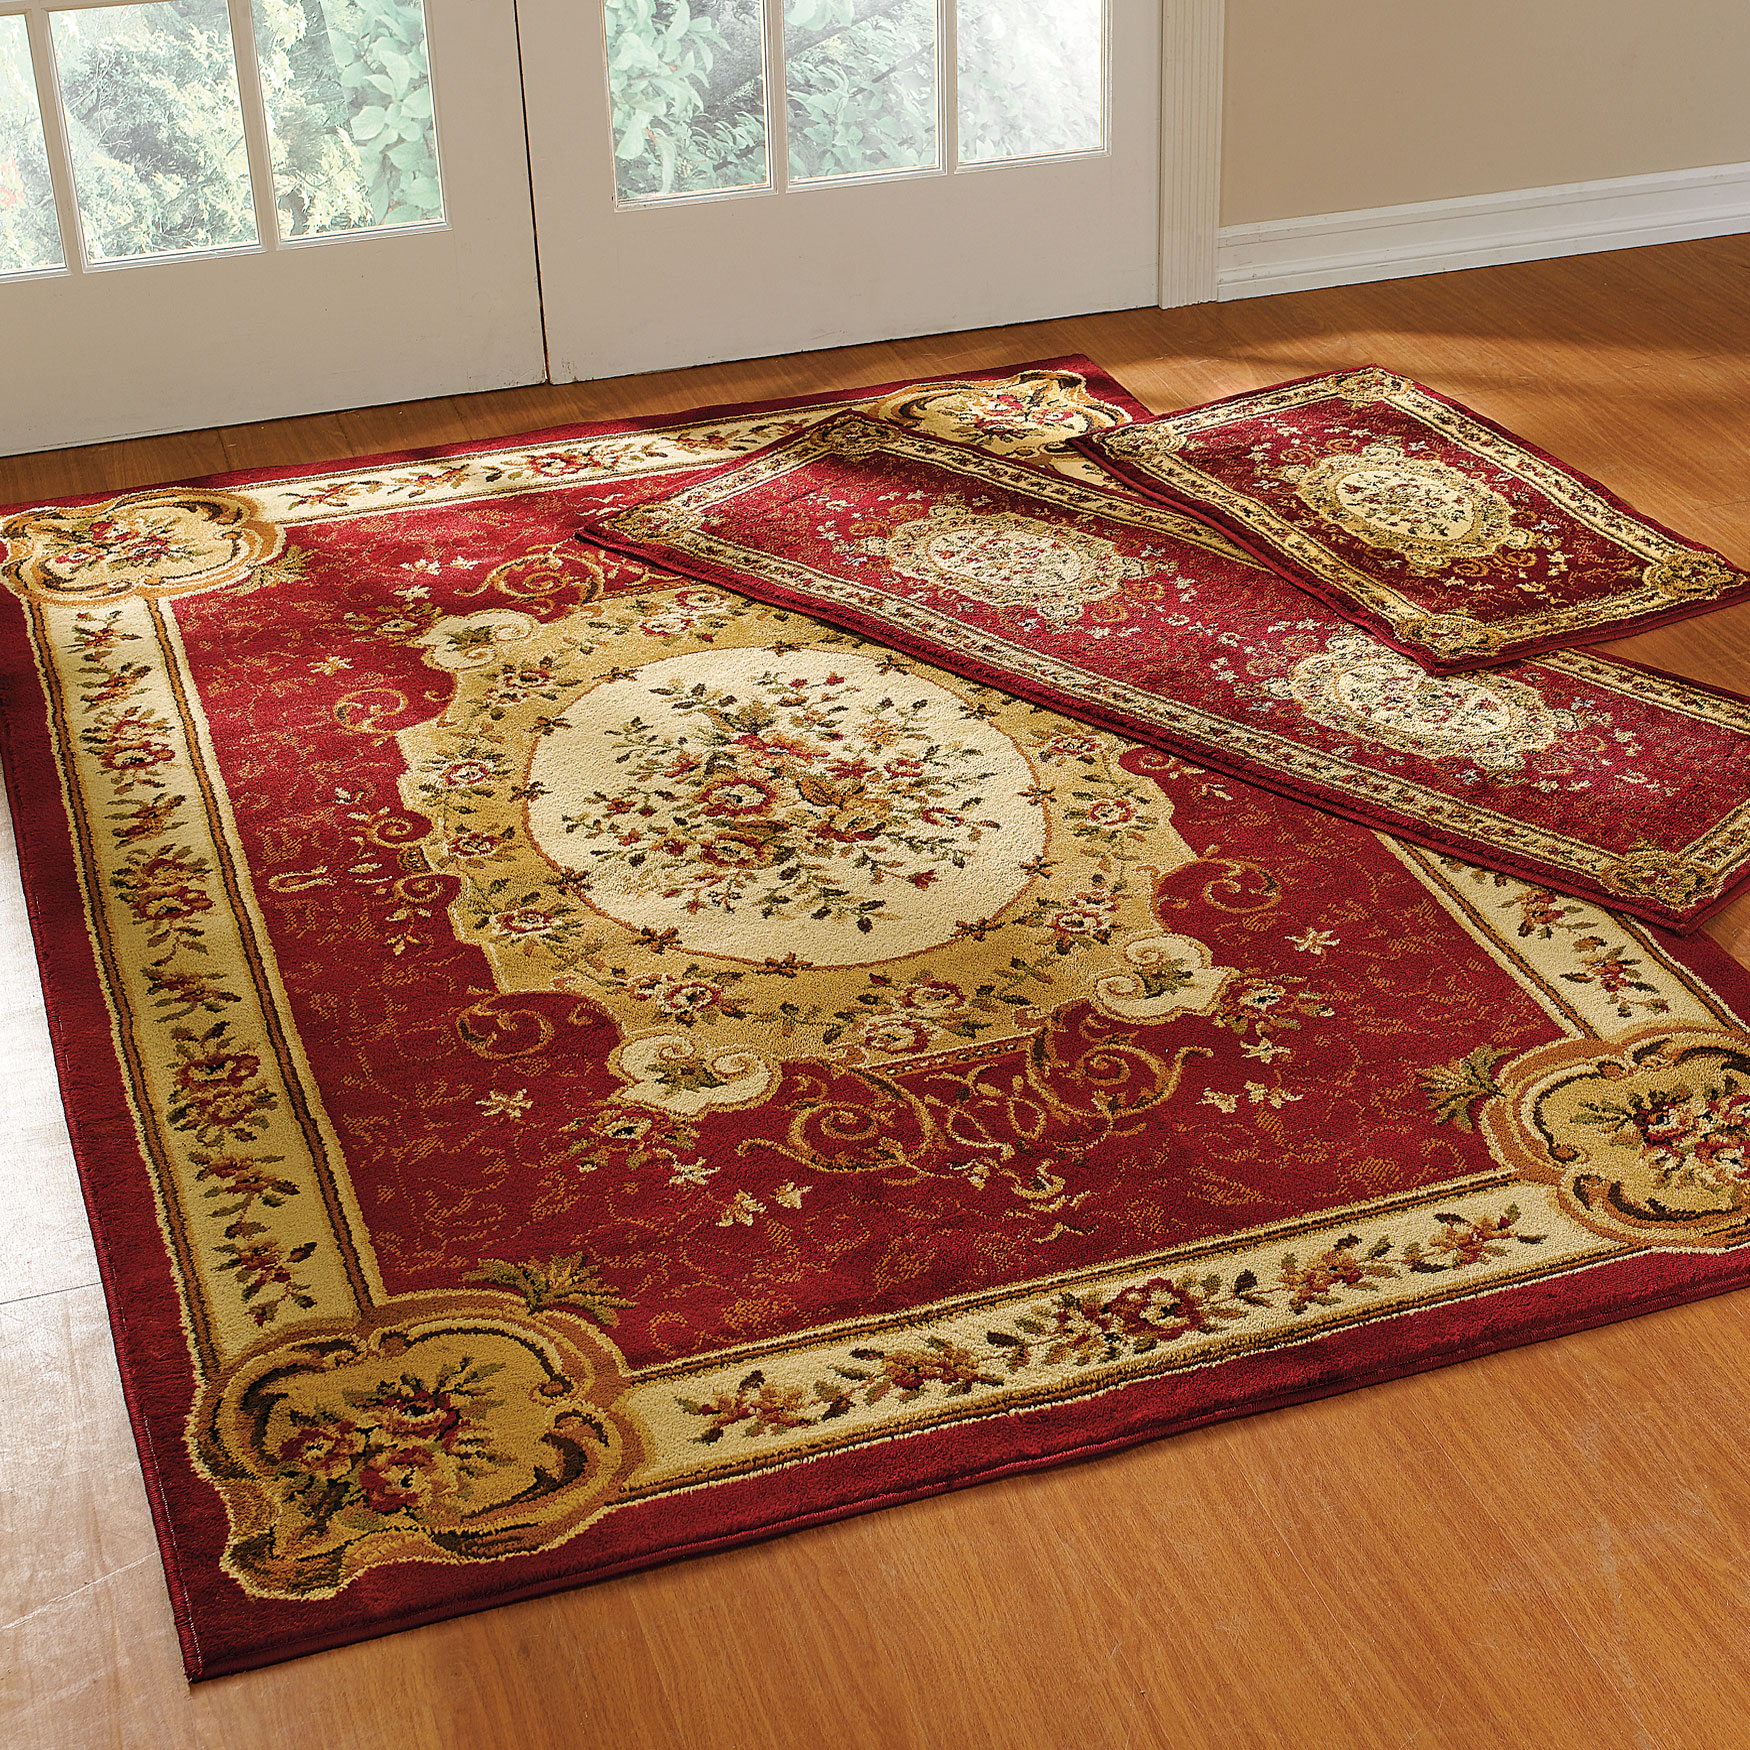 63x48 Inch Soft Area Rug and Carpet Floor Rug,Non-Slip Yellow Large Carpet Cartoon Thanksgiving Turkey 